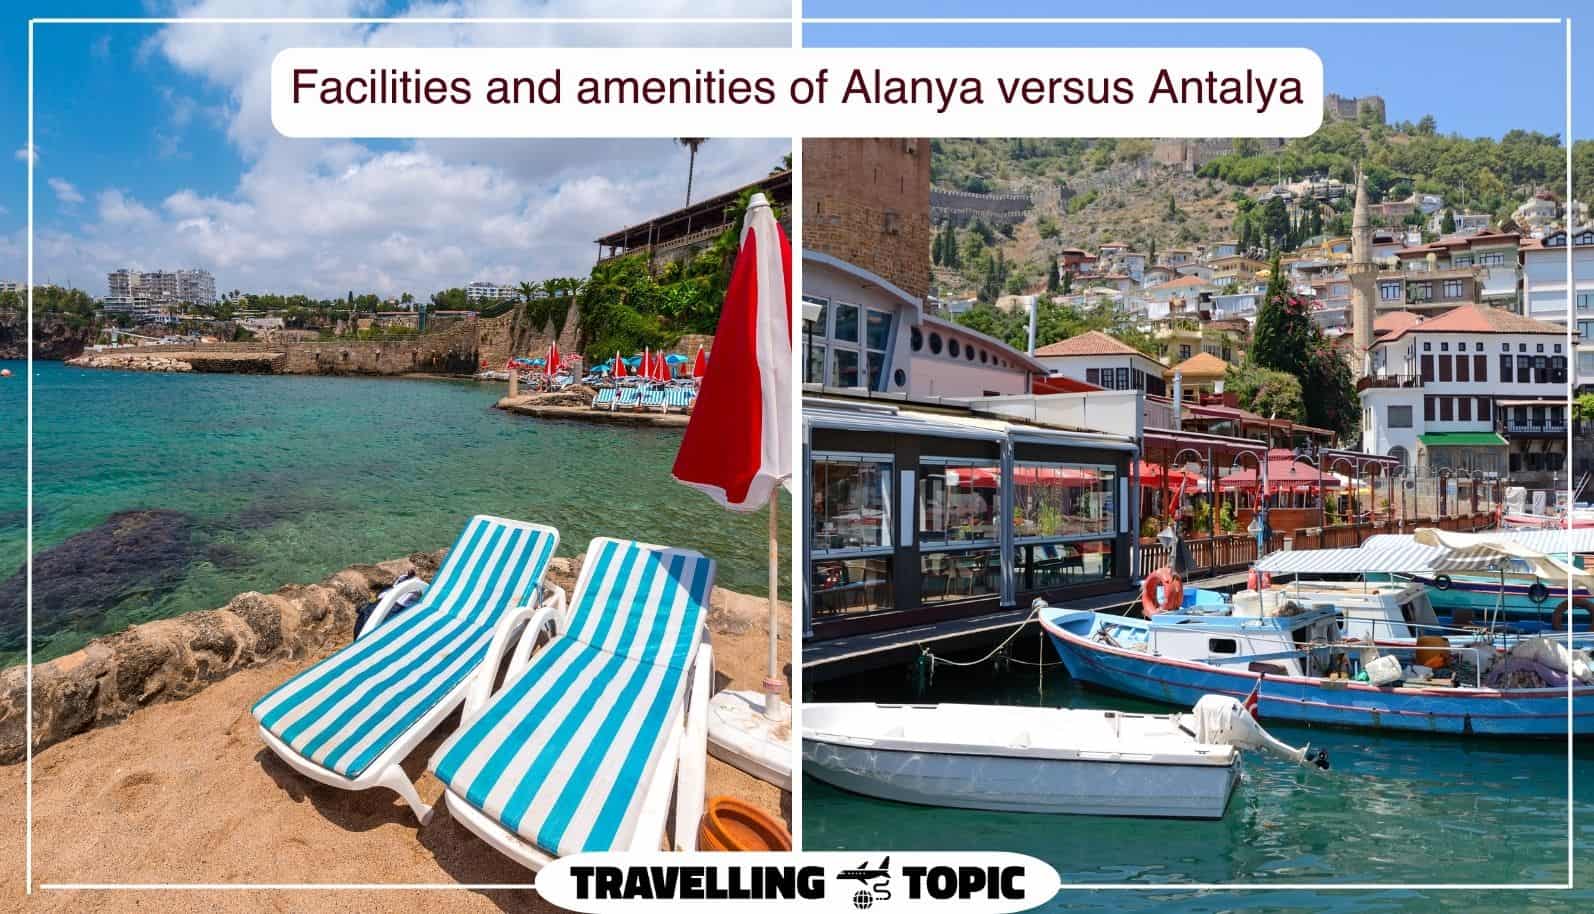 Facilities and amenities of Alanya versus Antalya